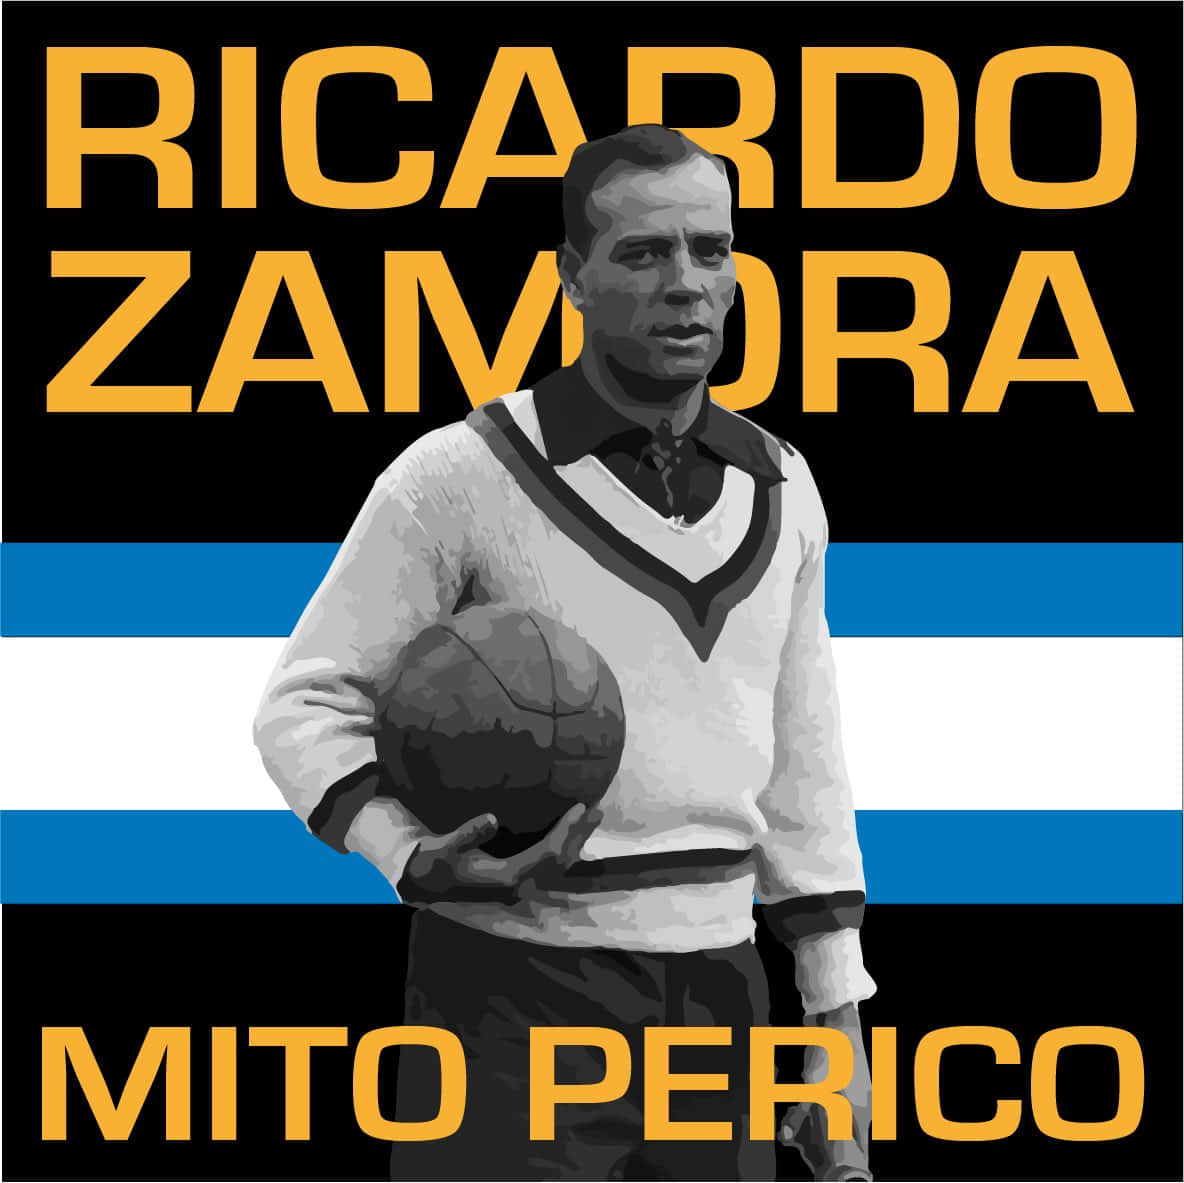 Artedigital Del Futbolista Español Ricardo Zamora Como Fondo De Pantalla De Computadora O Móvil. Fondo de pantalla